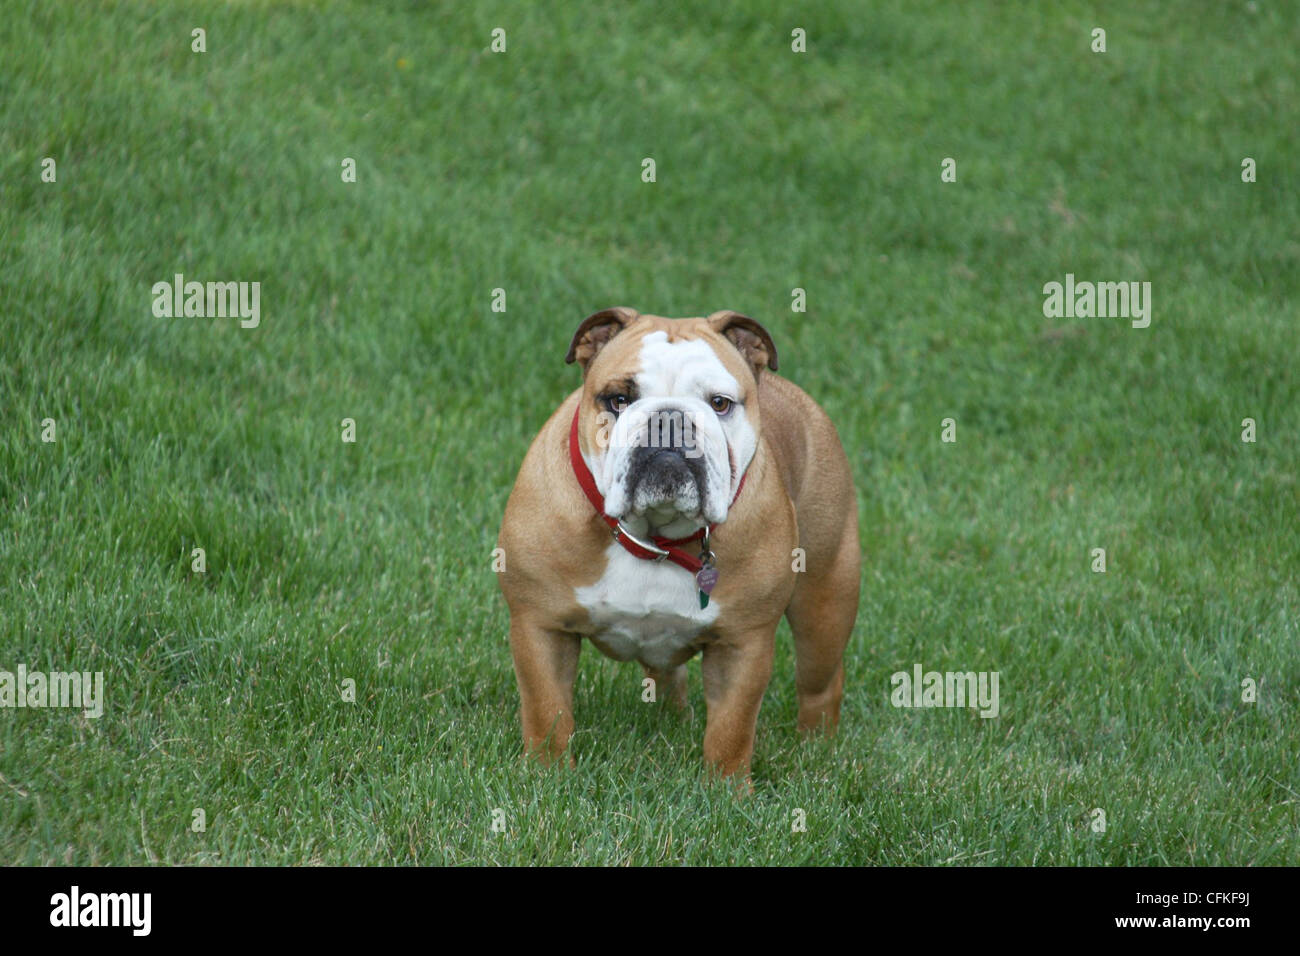 English Bulldog in backyard Stock Photo